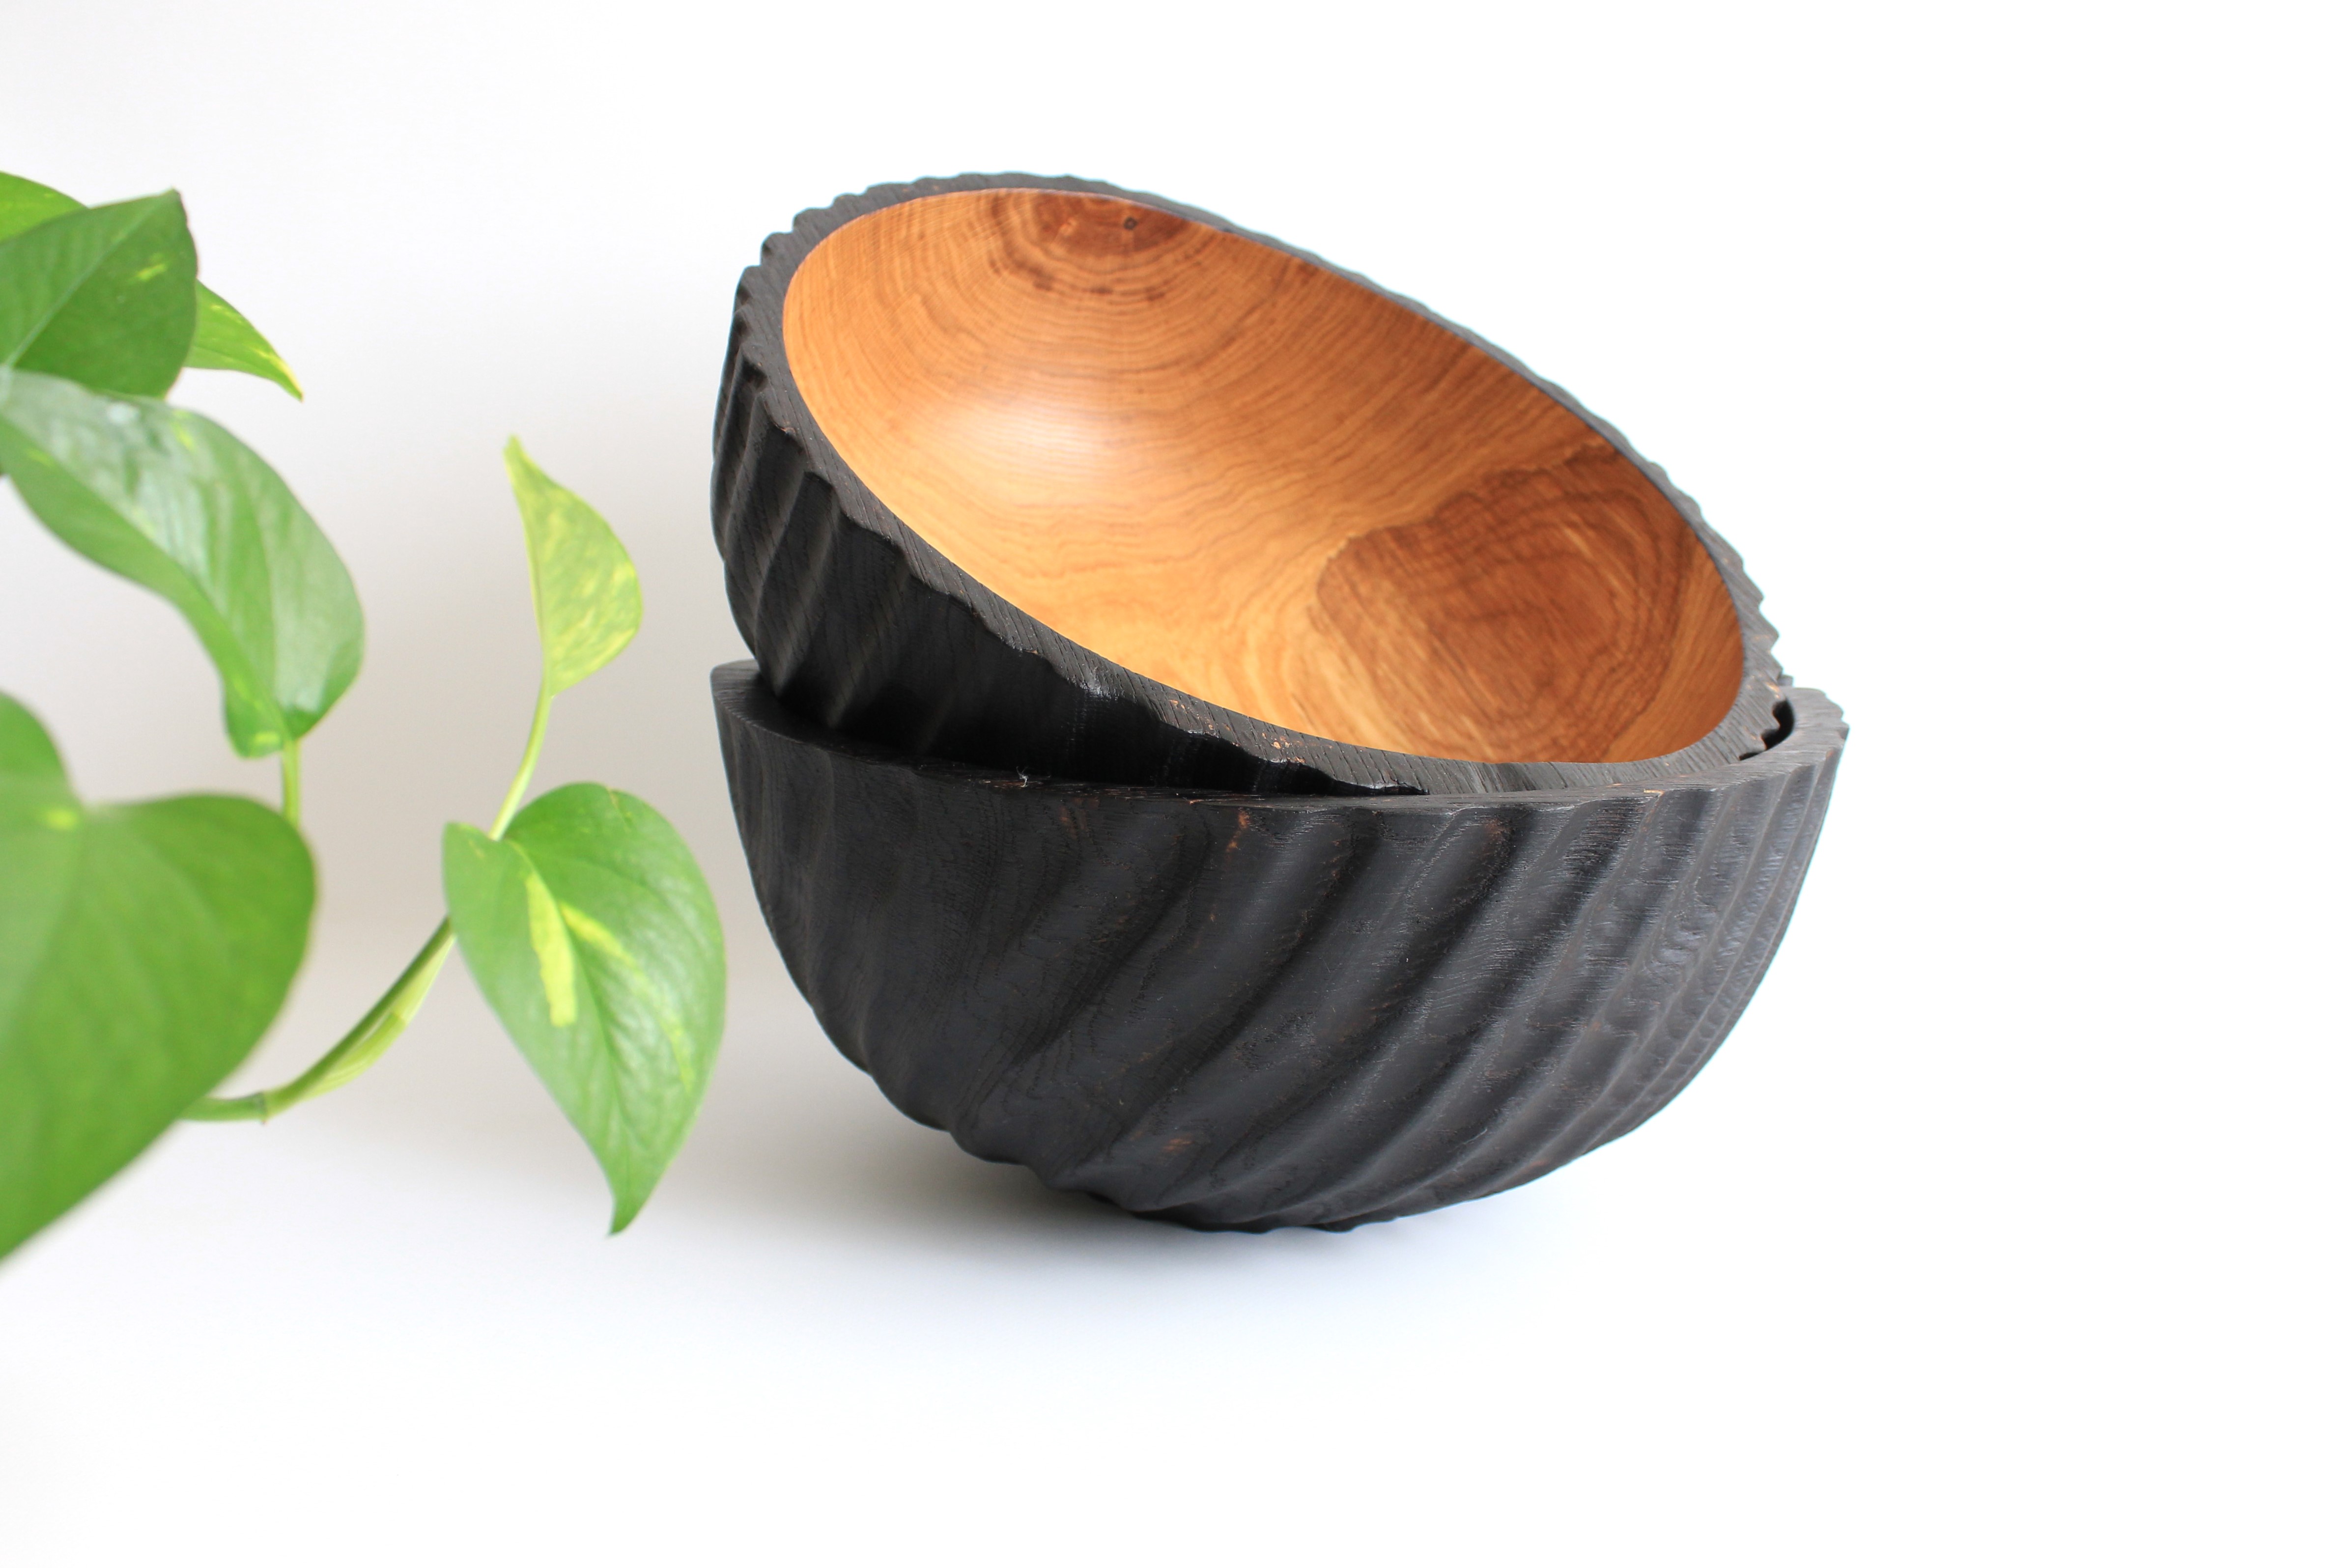 Large bowl for fruit or salad, wooden centerpiece bowl handmade